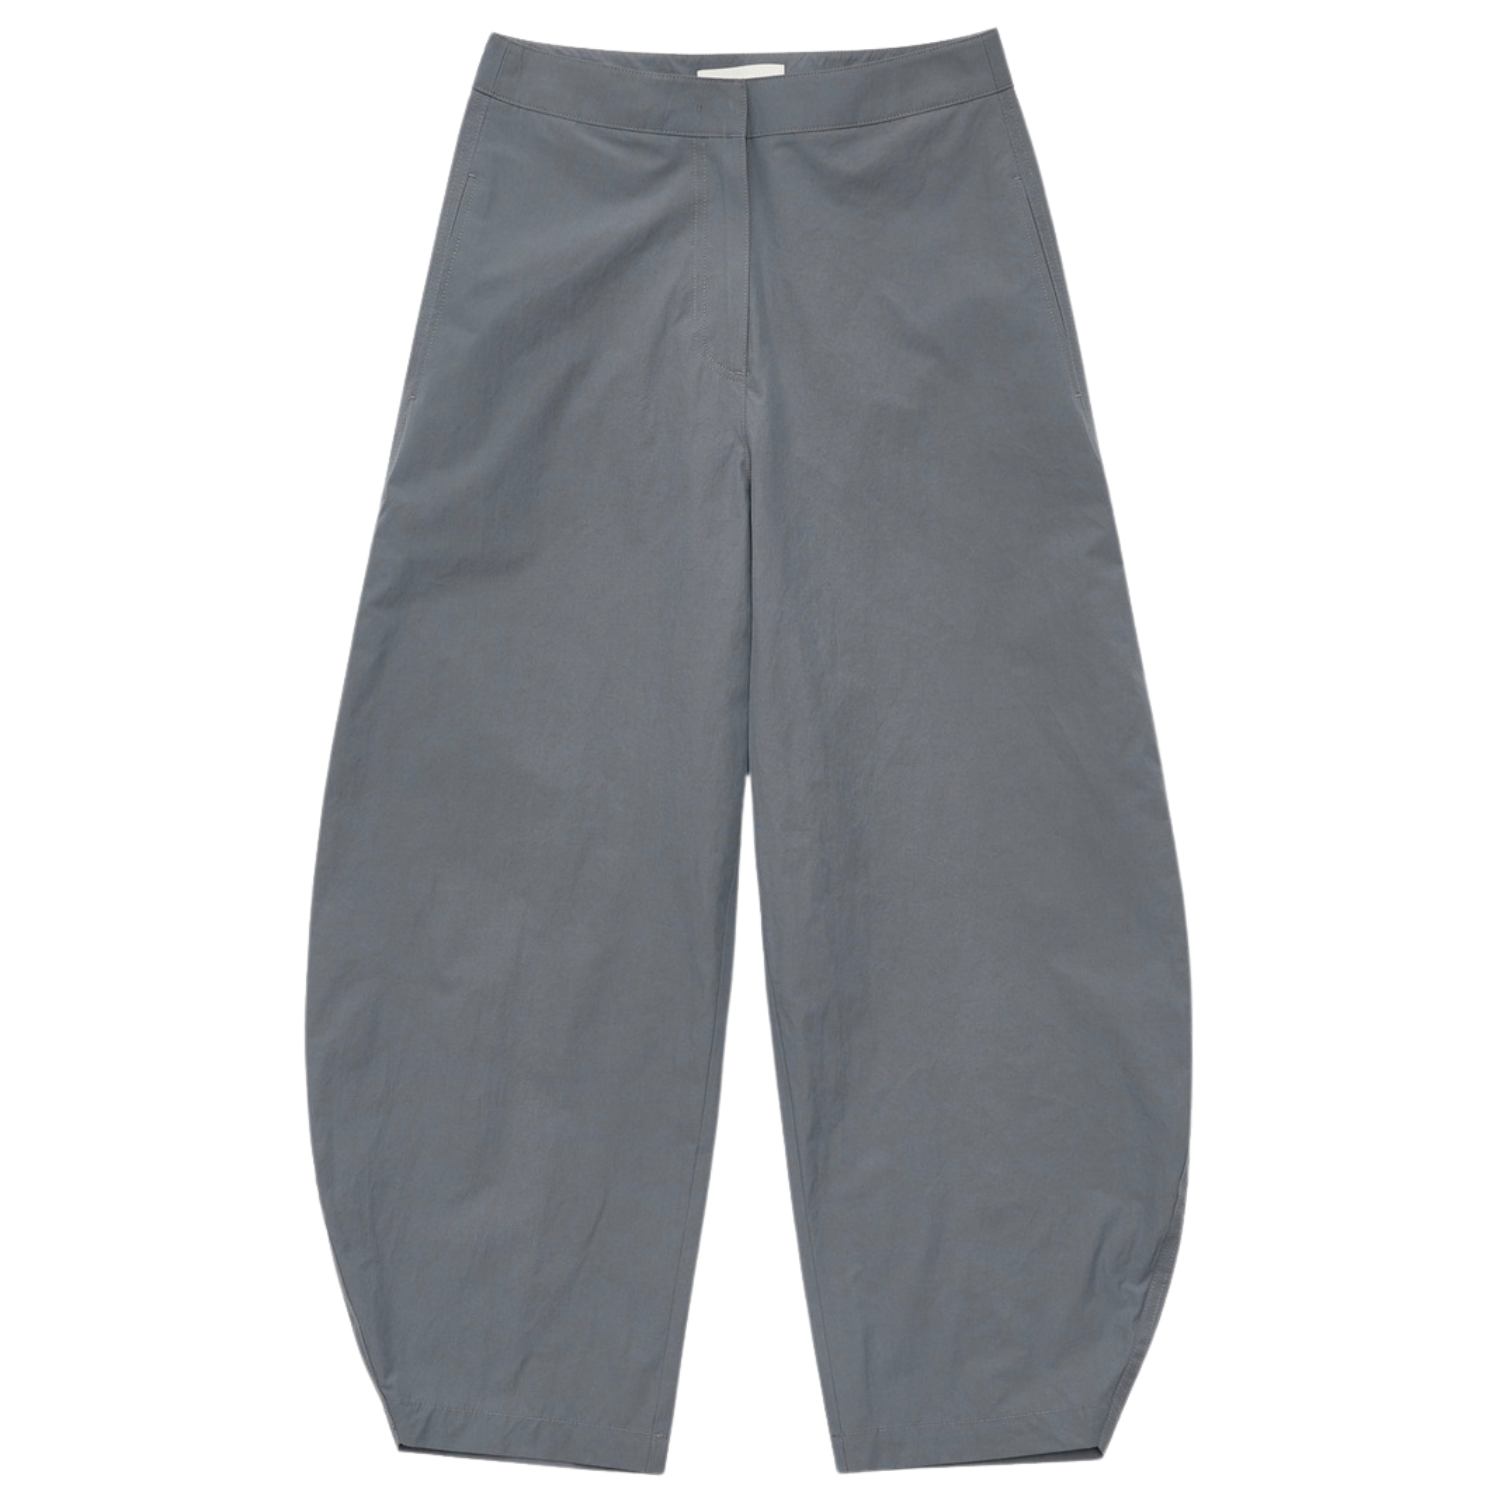 Grey Cotton Spandex Pants, PAHERVESH-NP-GREY